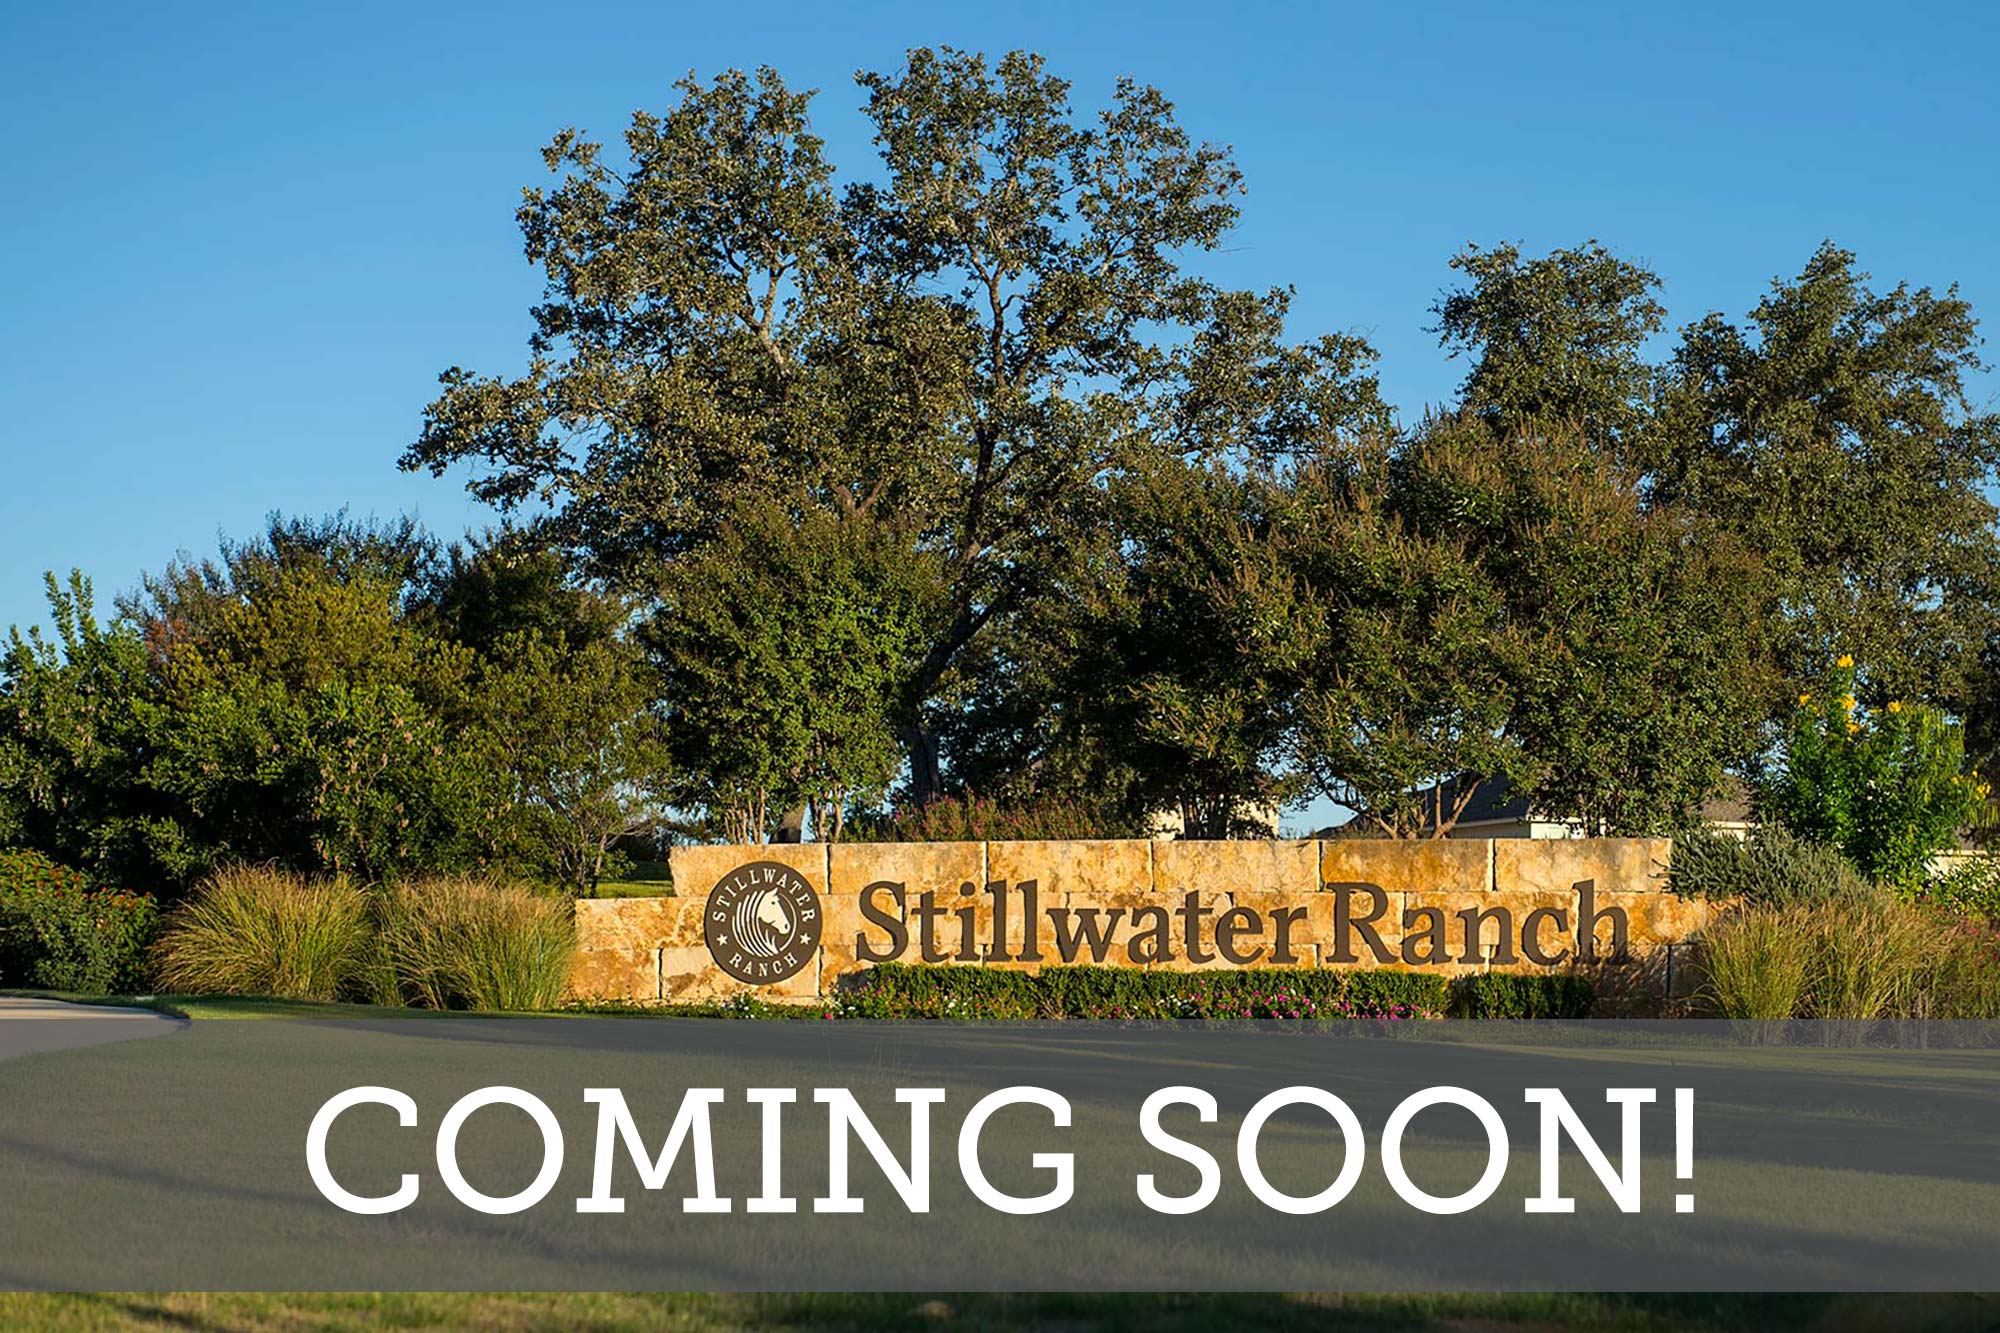 Stillwater Ranch - Coming Soon